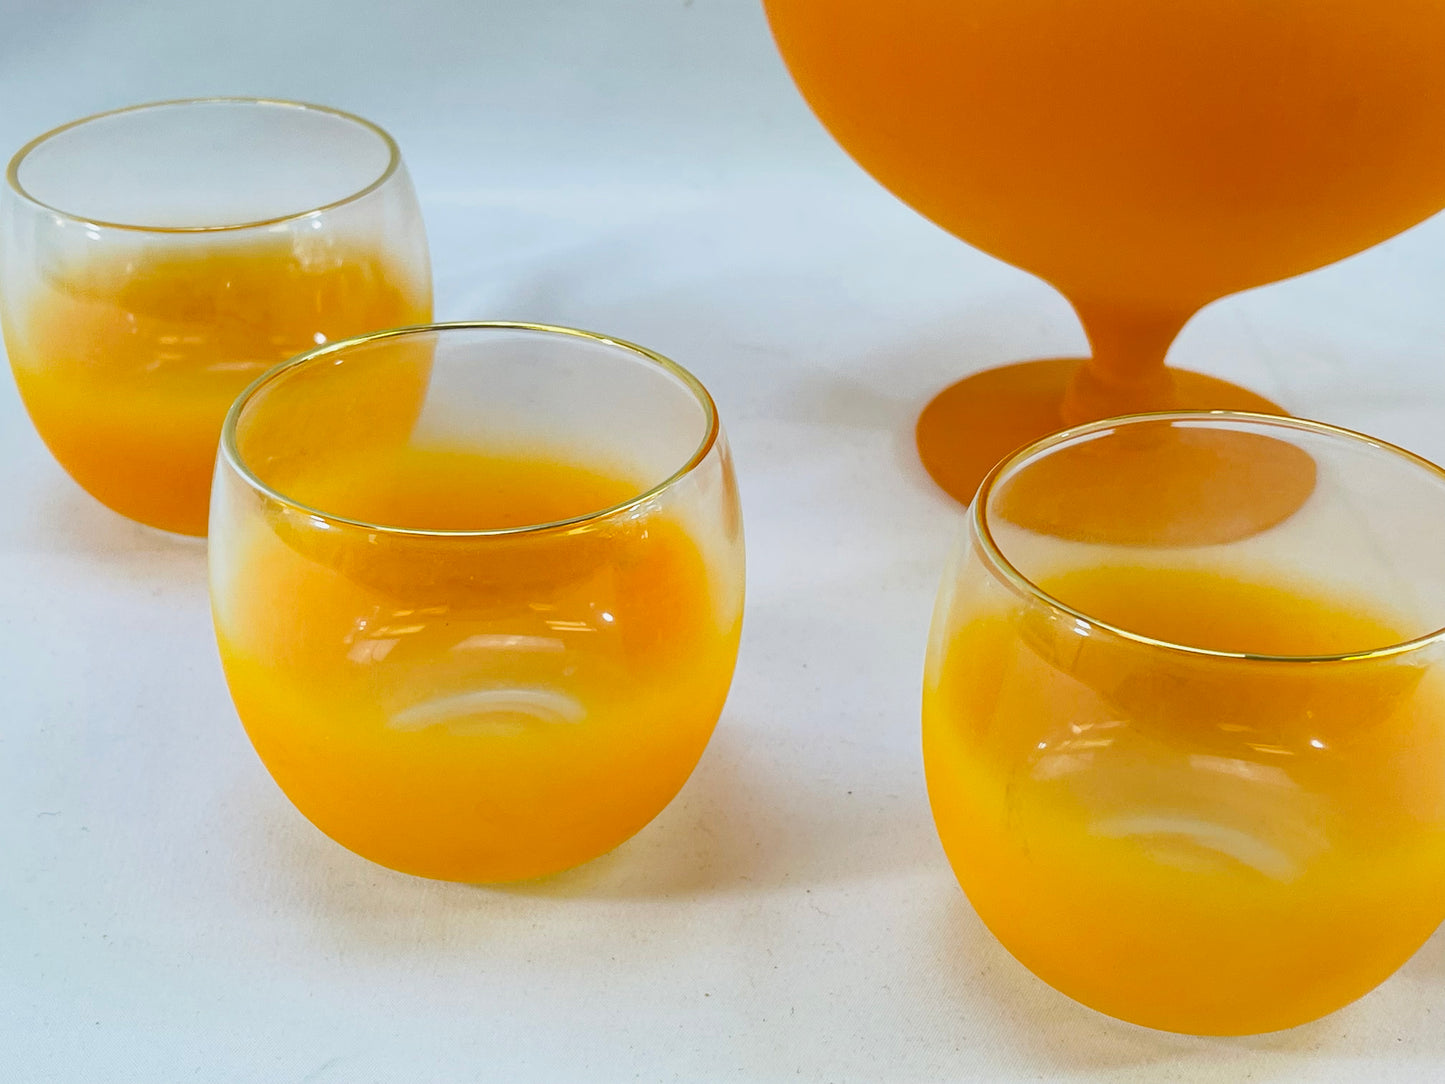 Orange Blendo Snifter Decanter & Roly Poly Glasses